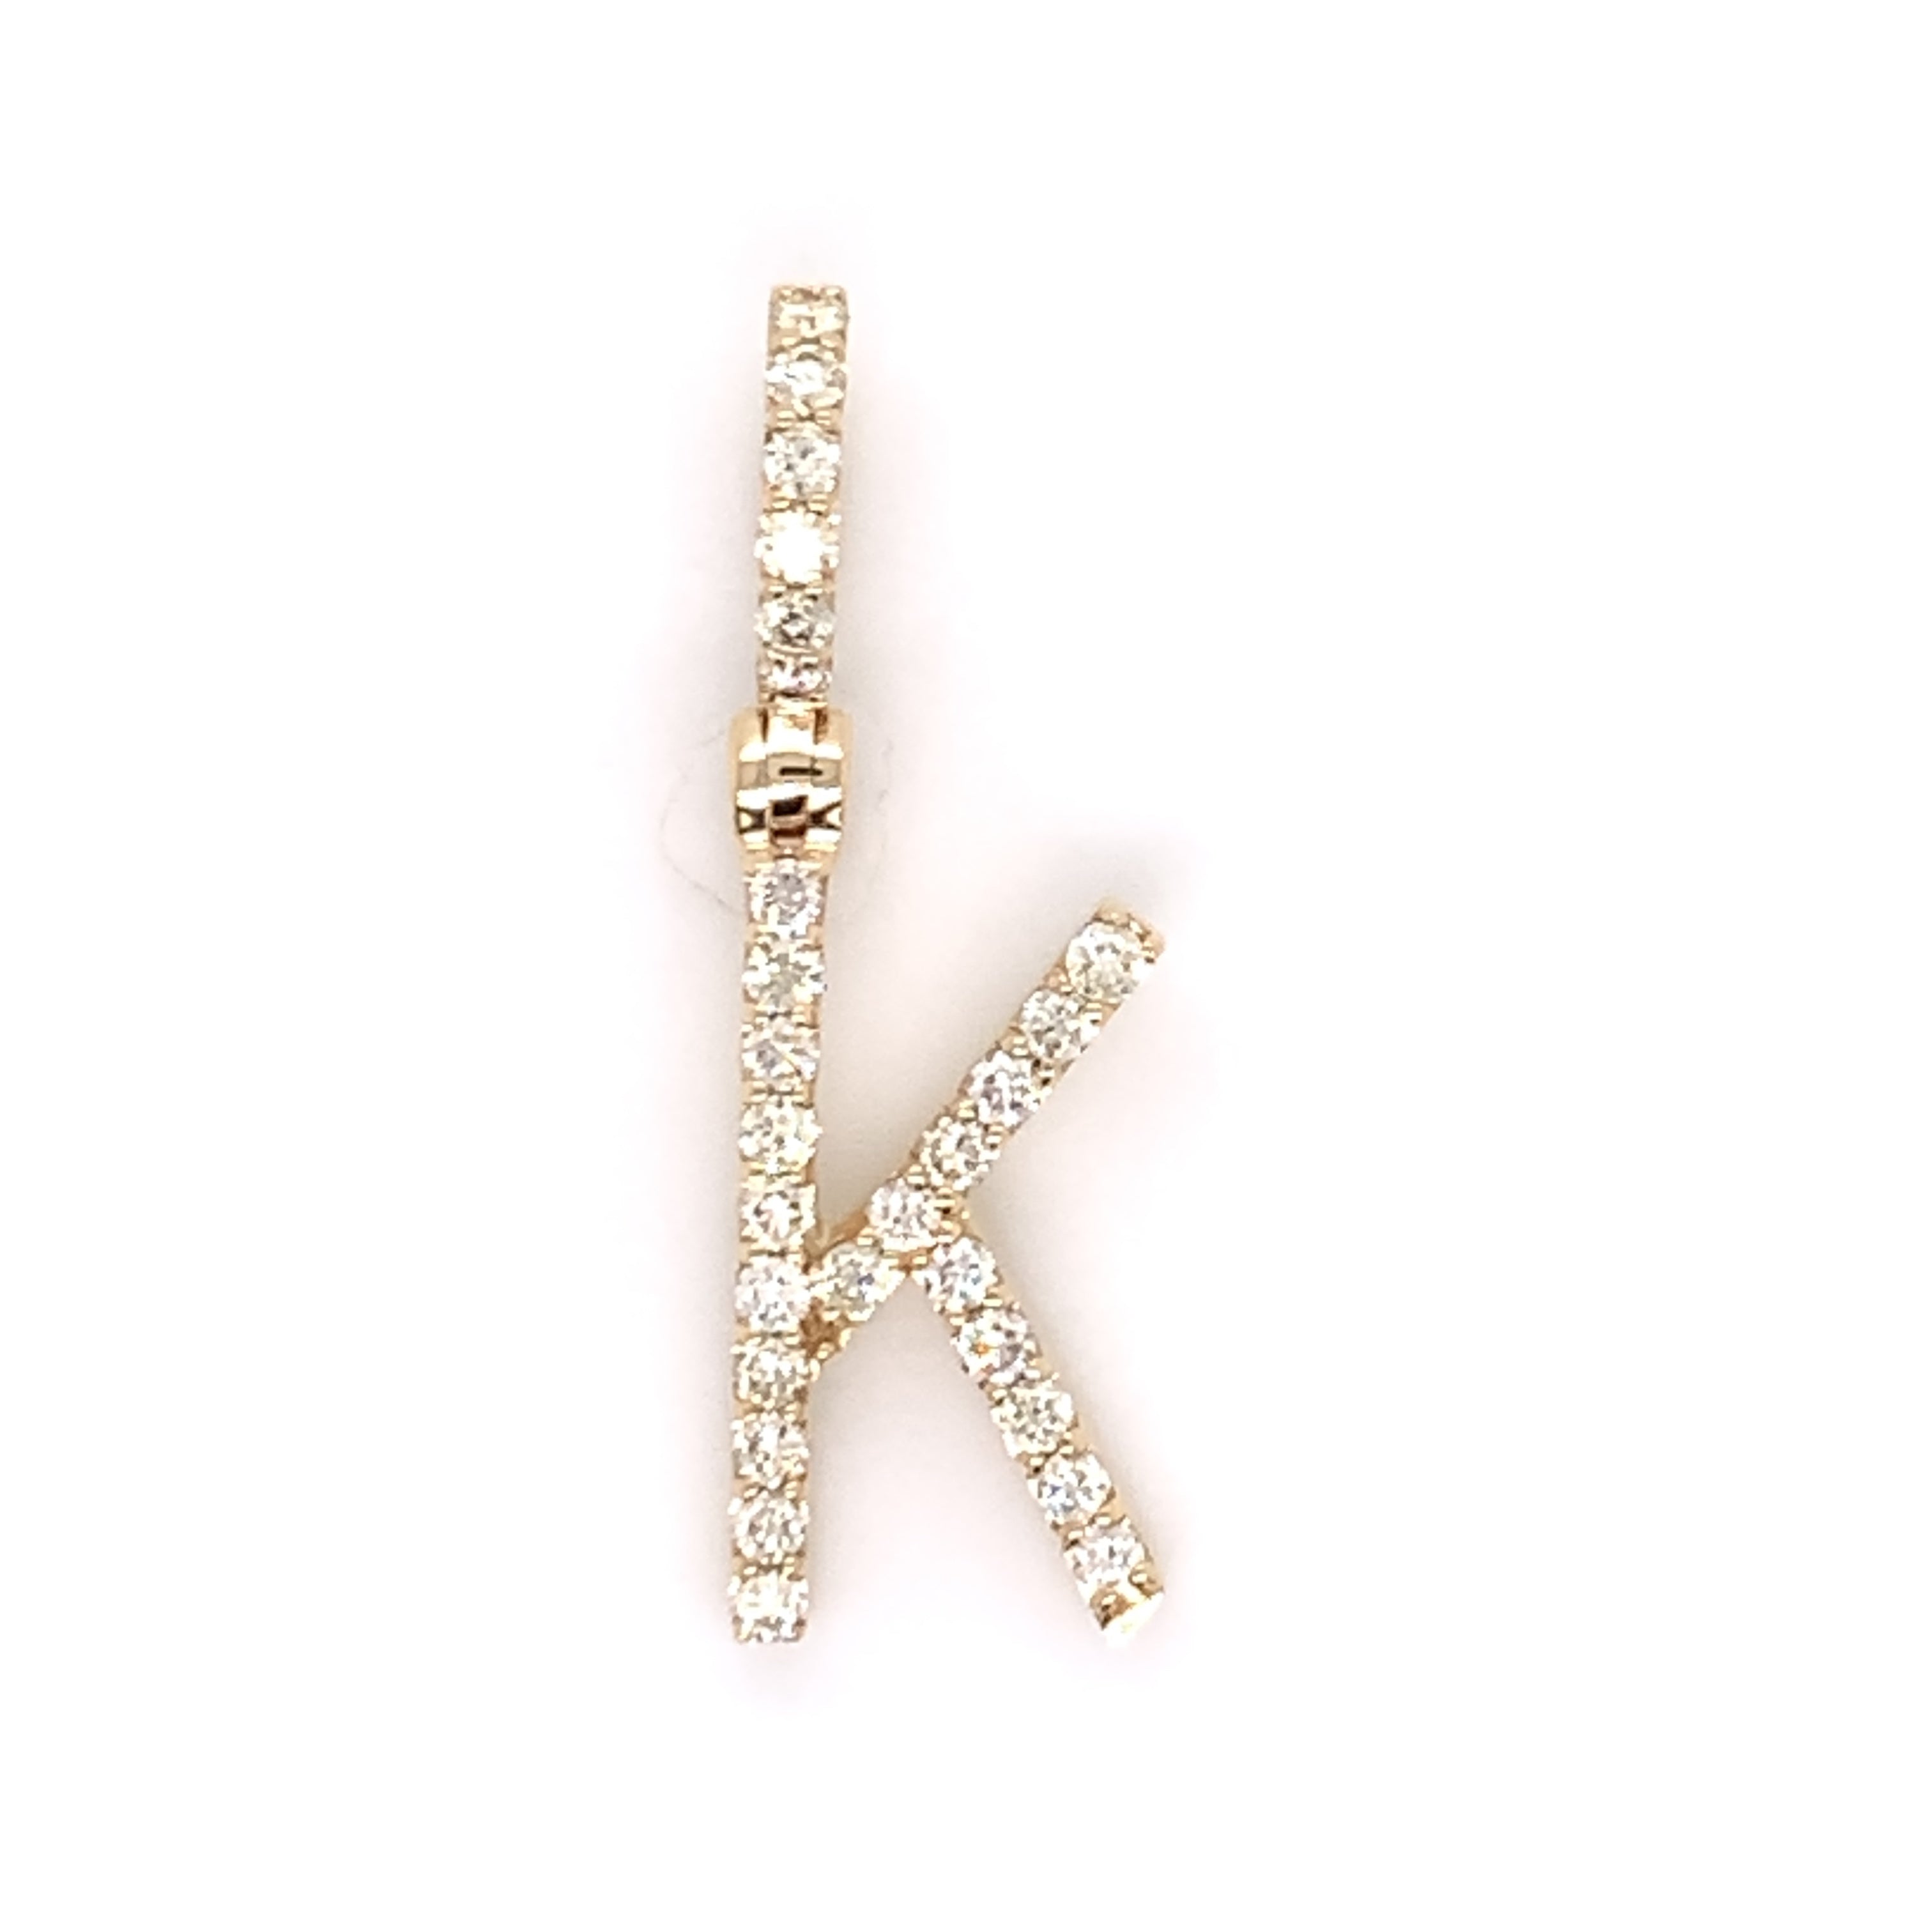 0.80 CT. Diamond Letter "K" Pendant in 10K Gold - White Carat - USA & Canada